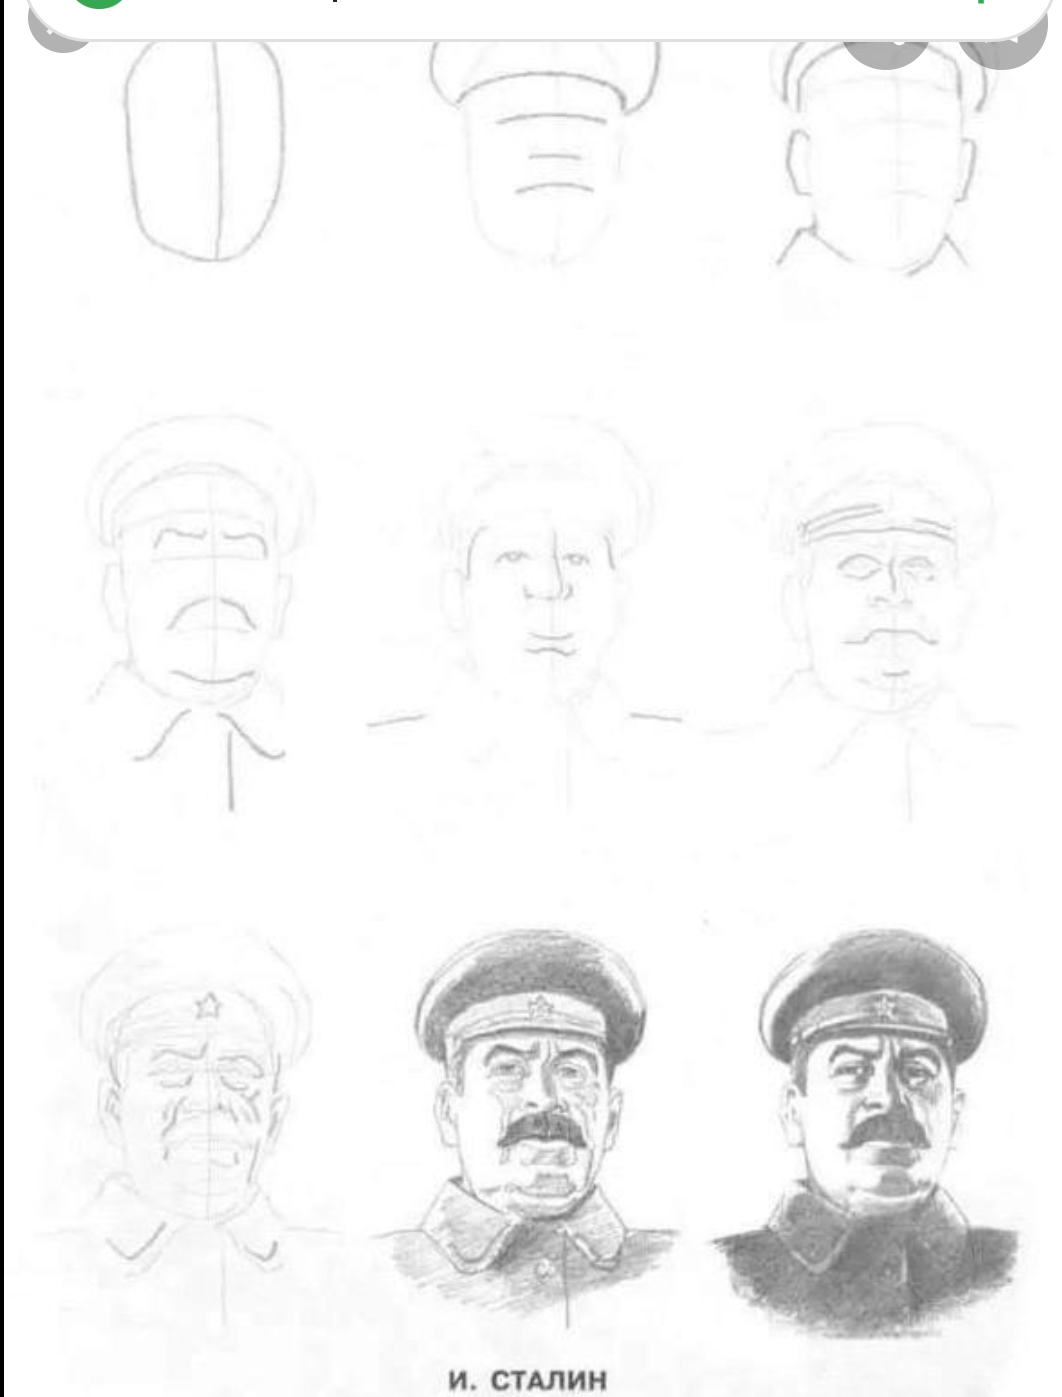 Сталин портрет карандашом поэтапно